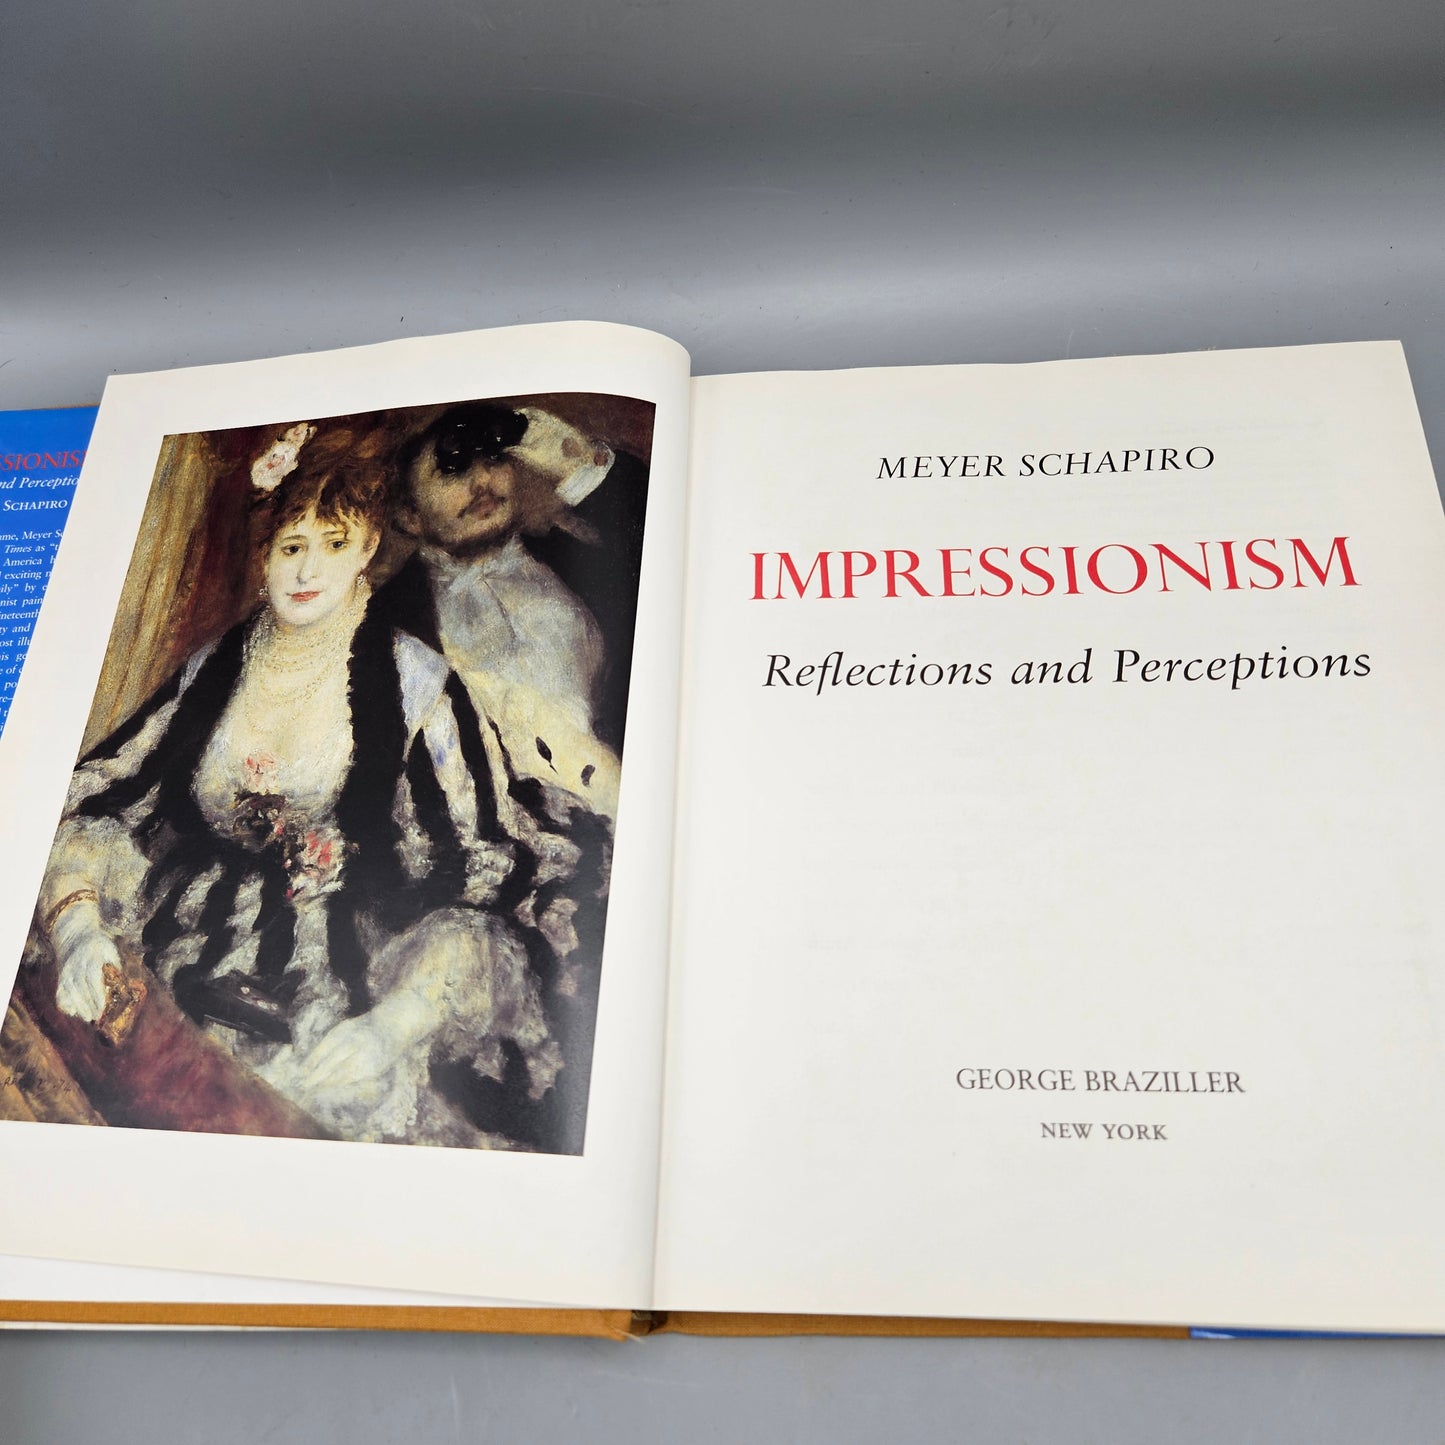 Meyer Schapiro - Impressionism: Reflections and Perceptions